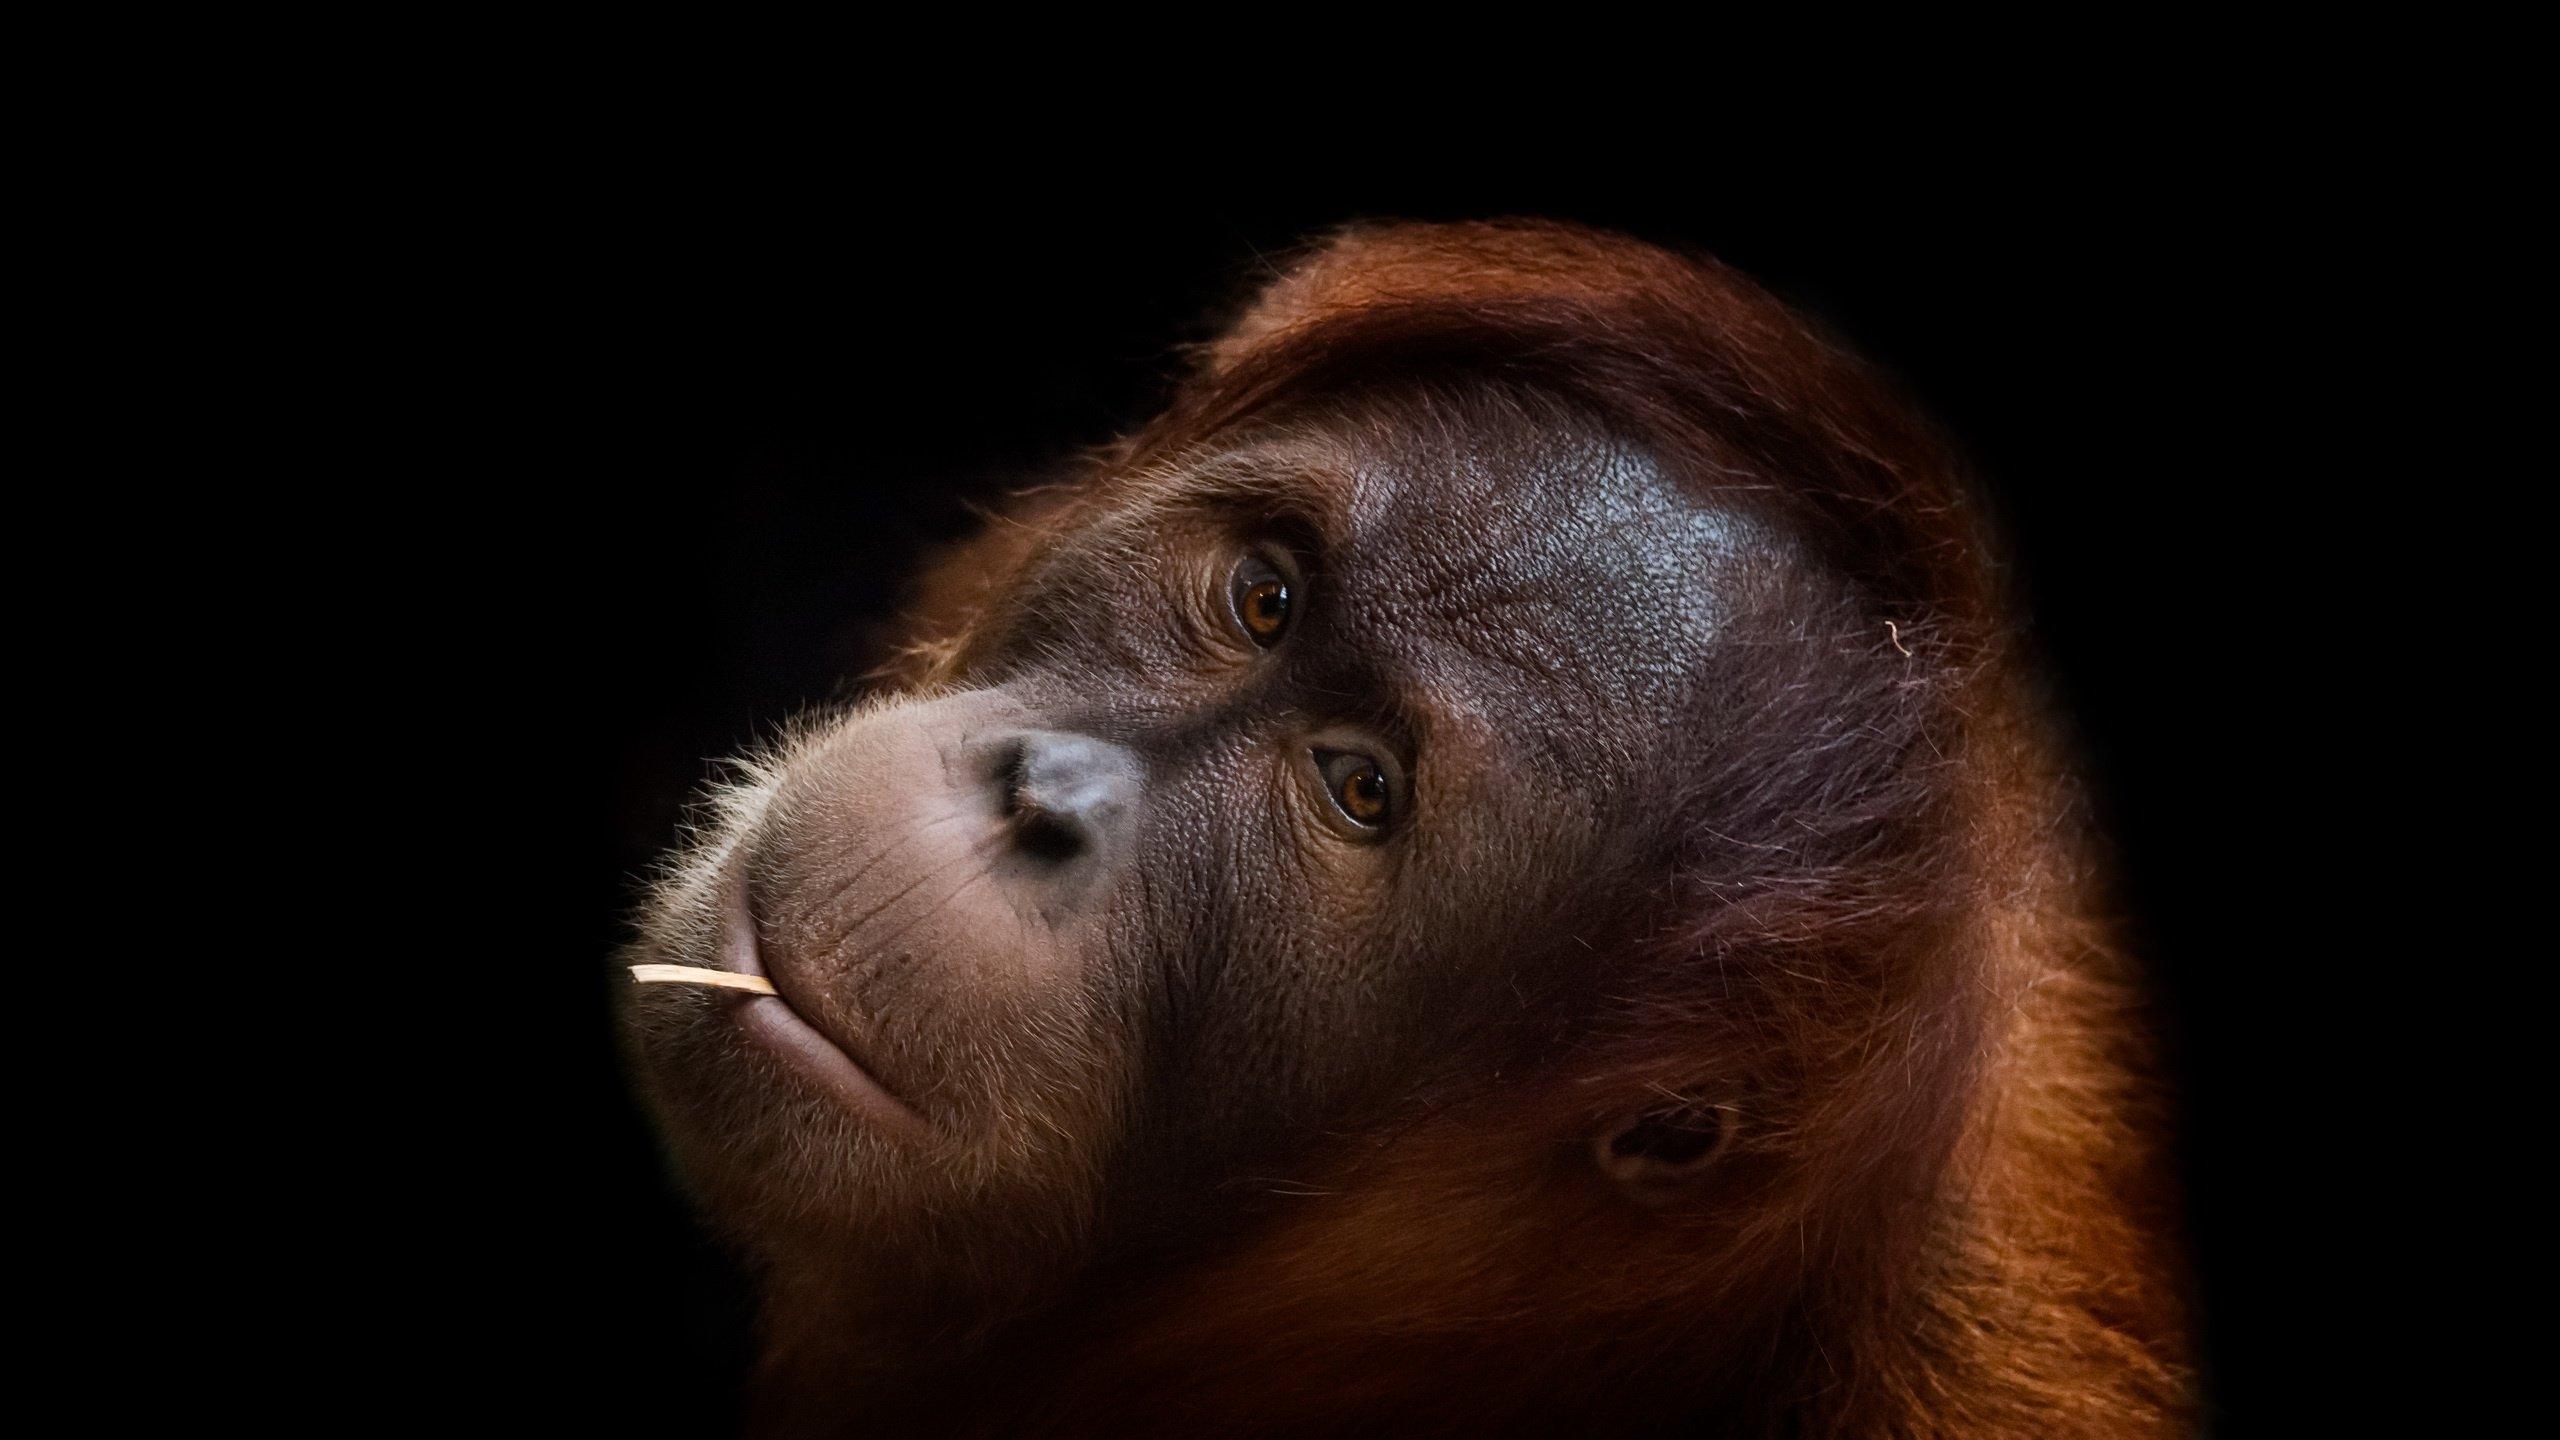 Orangutan wallpaper 2560x1440 desktop background